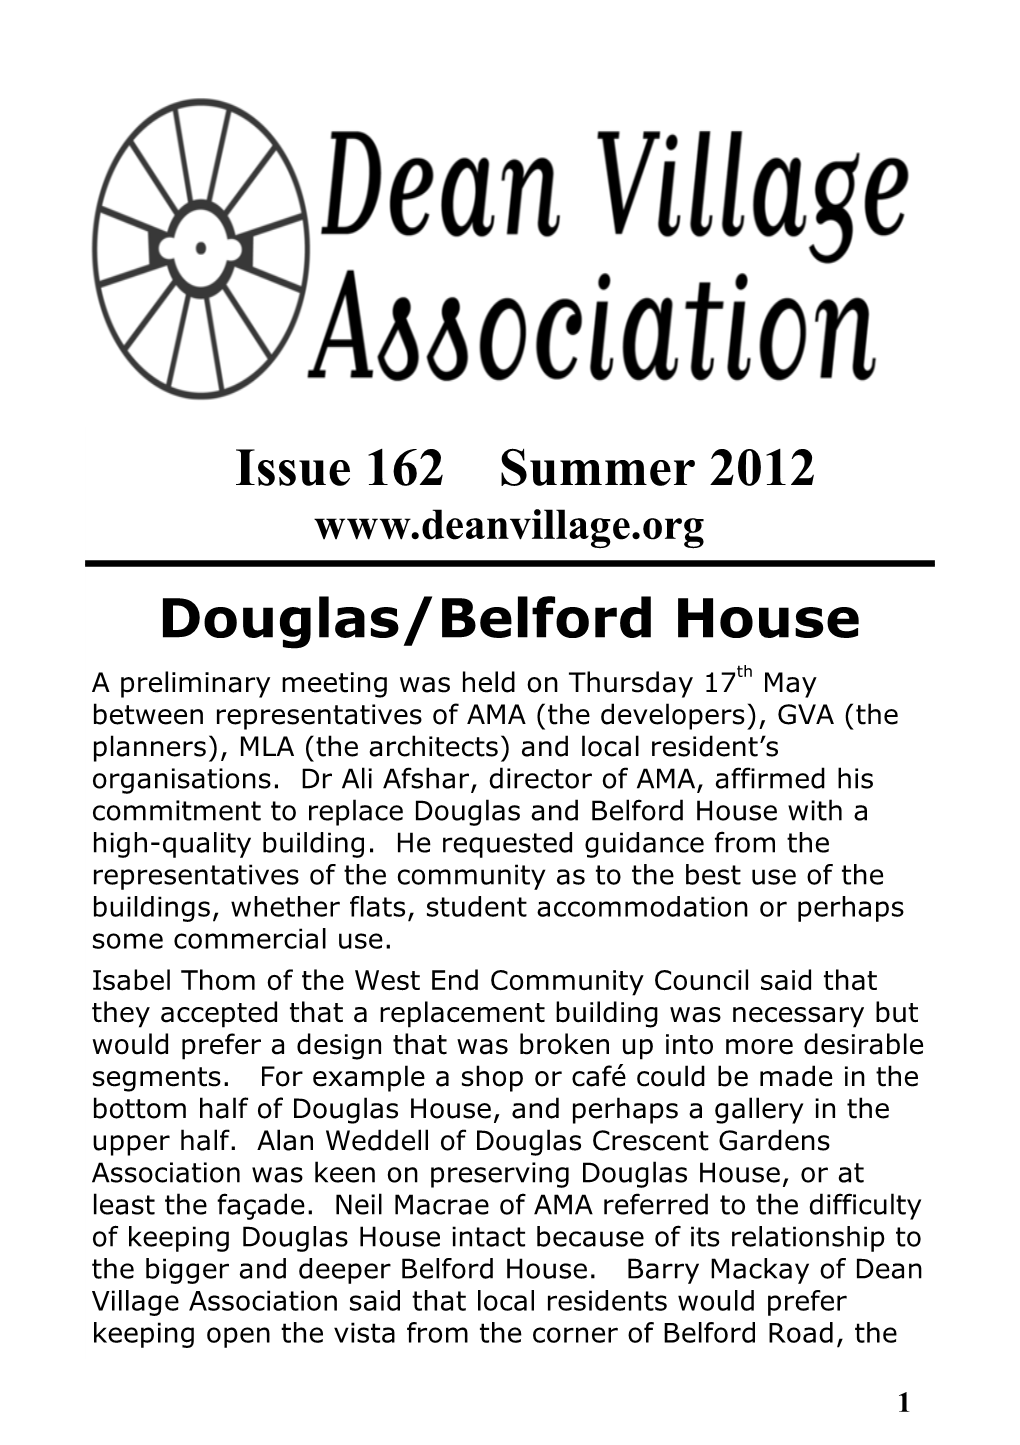 Issue 162: Summer 2012